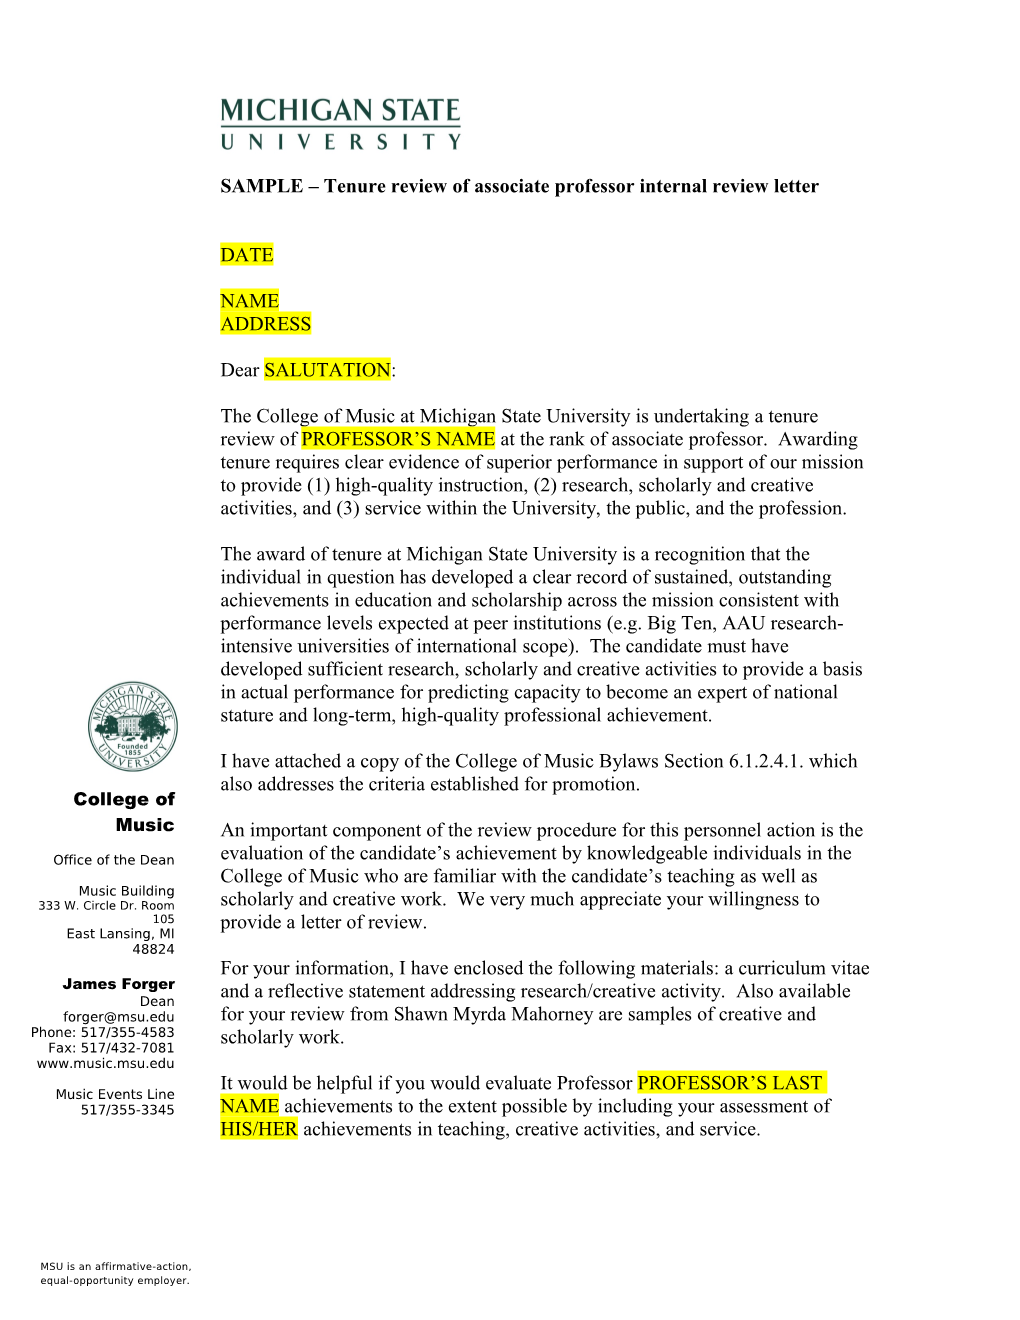 SAMPLE Tenure Review of Associate Professor Internal Review Letter